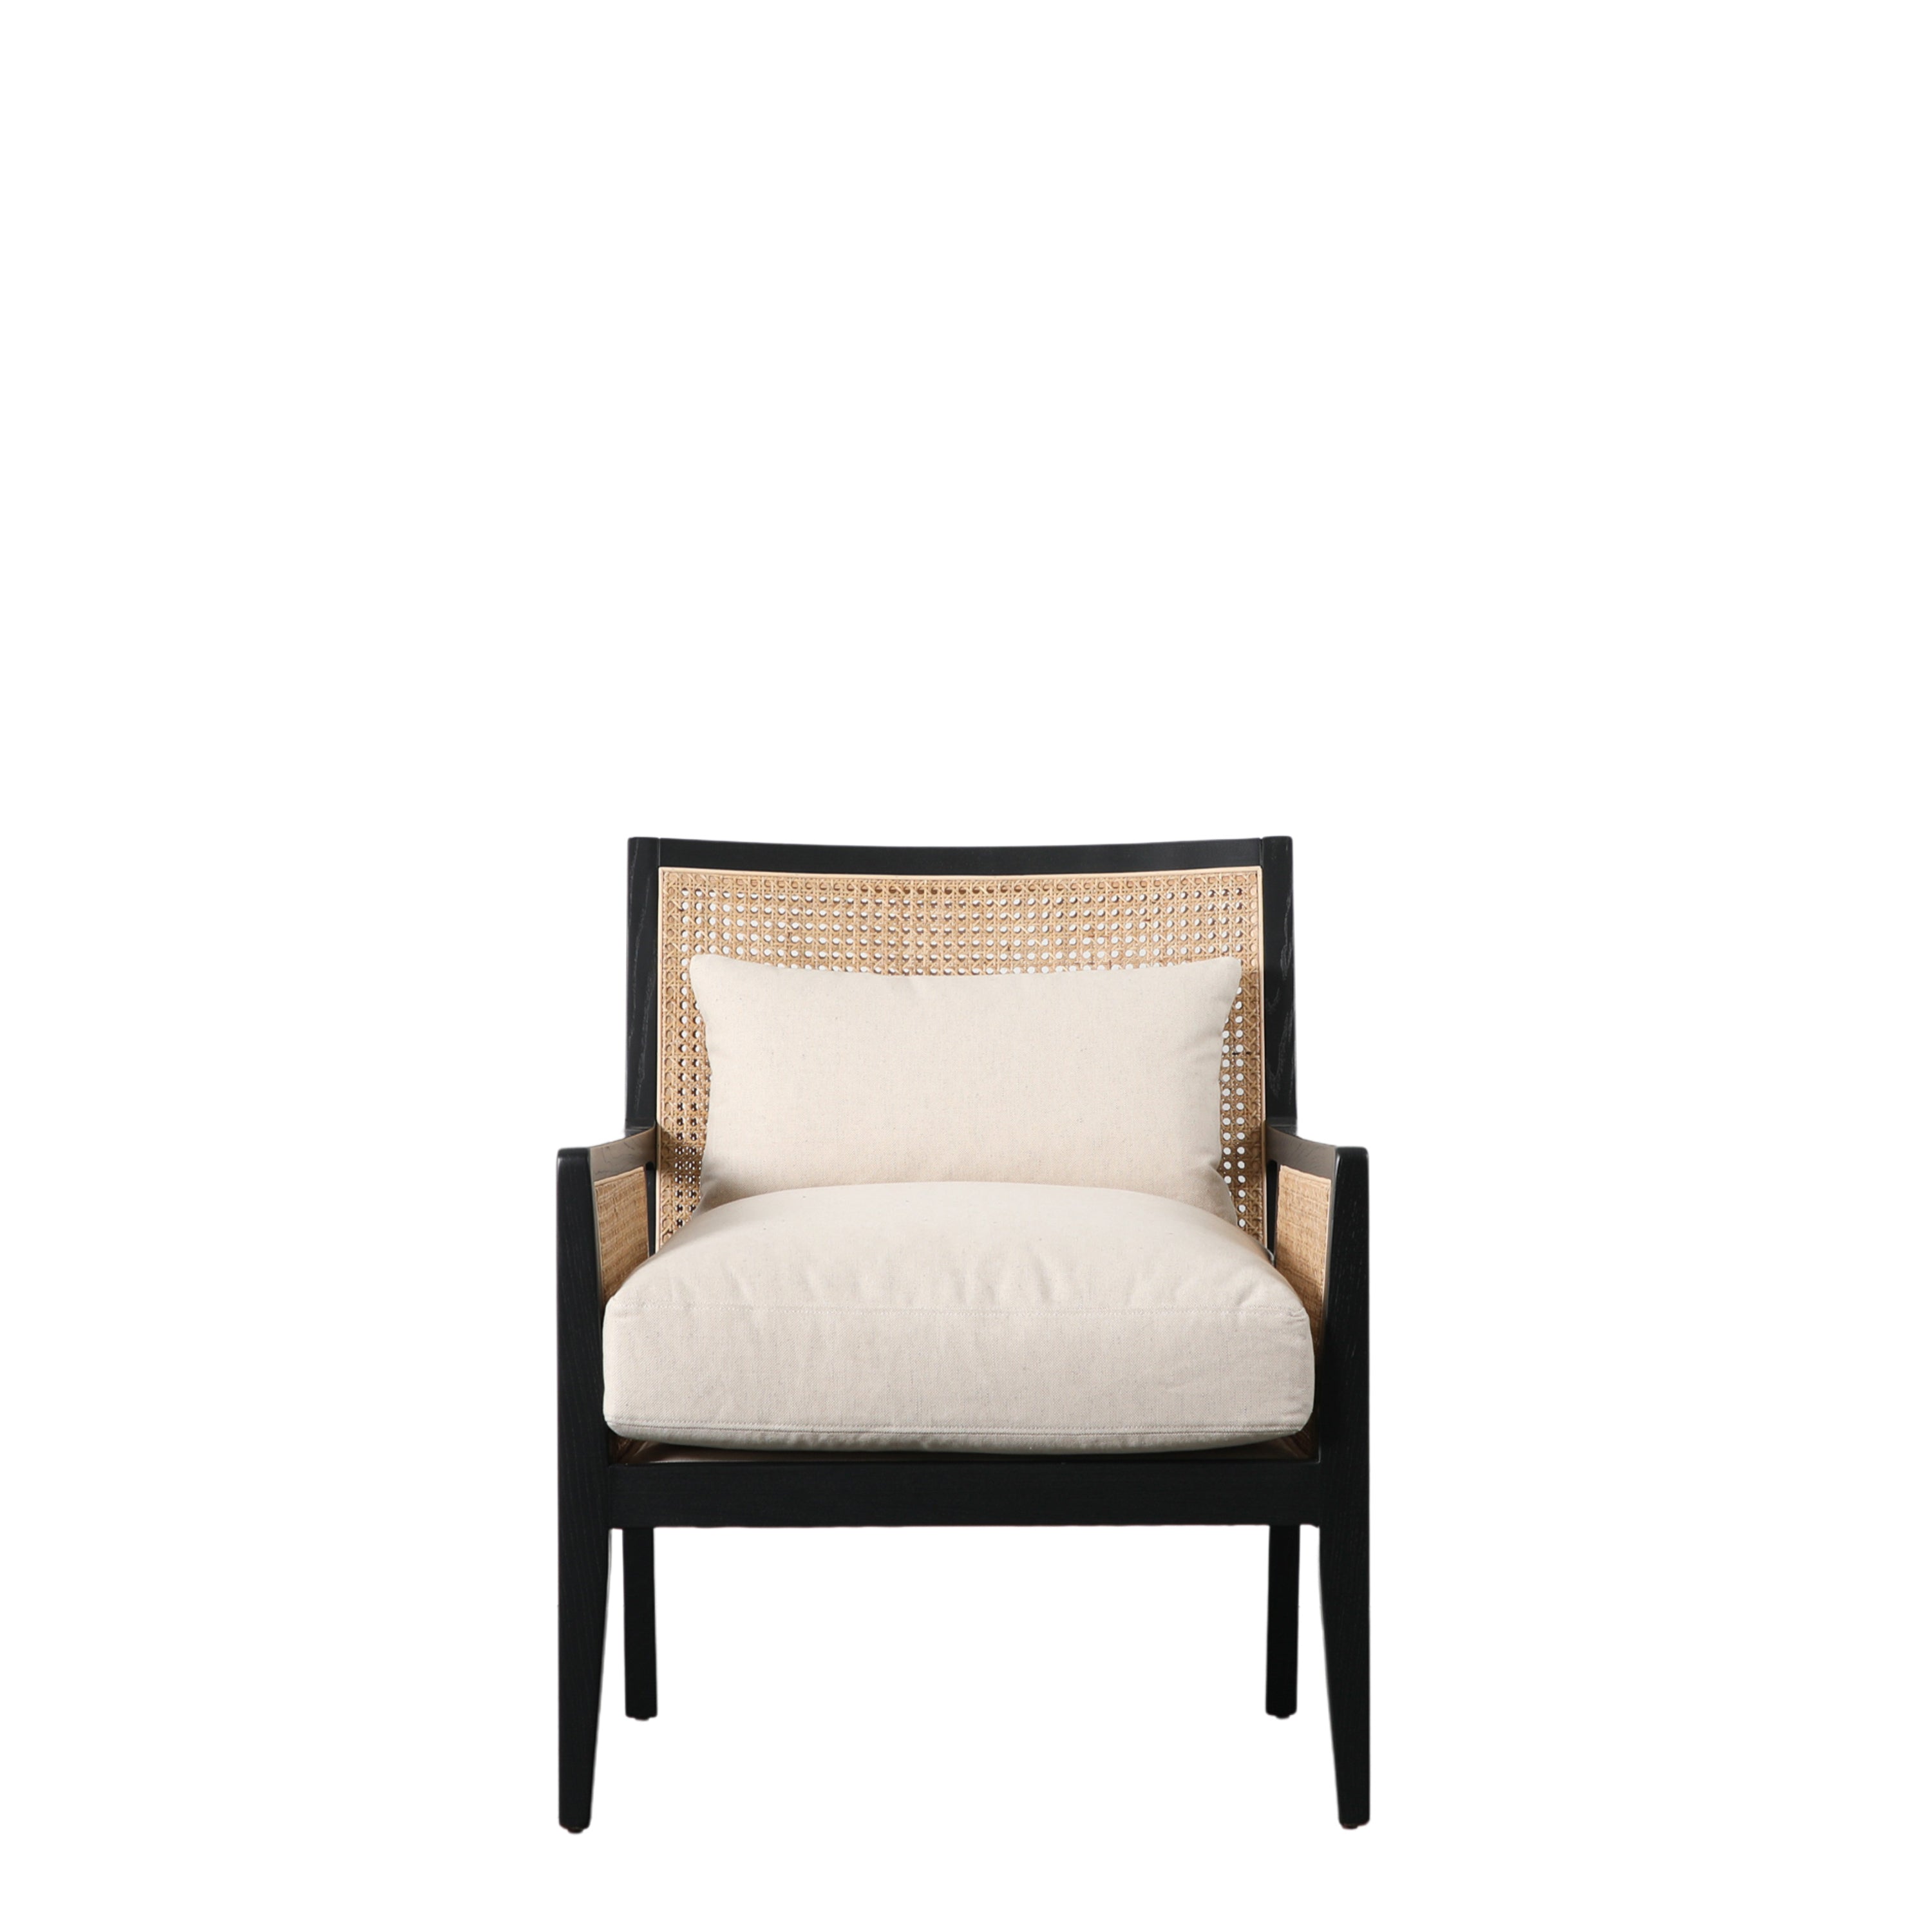 Osaka armchair in black solid wood frame with rattan detail | malletandplane.com